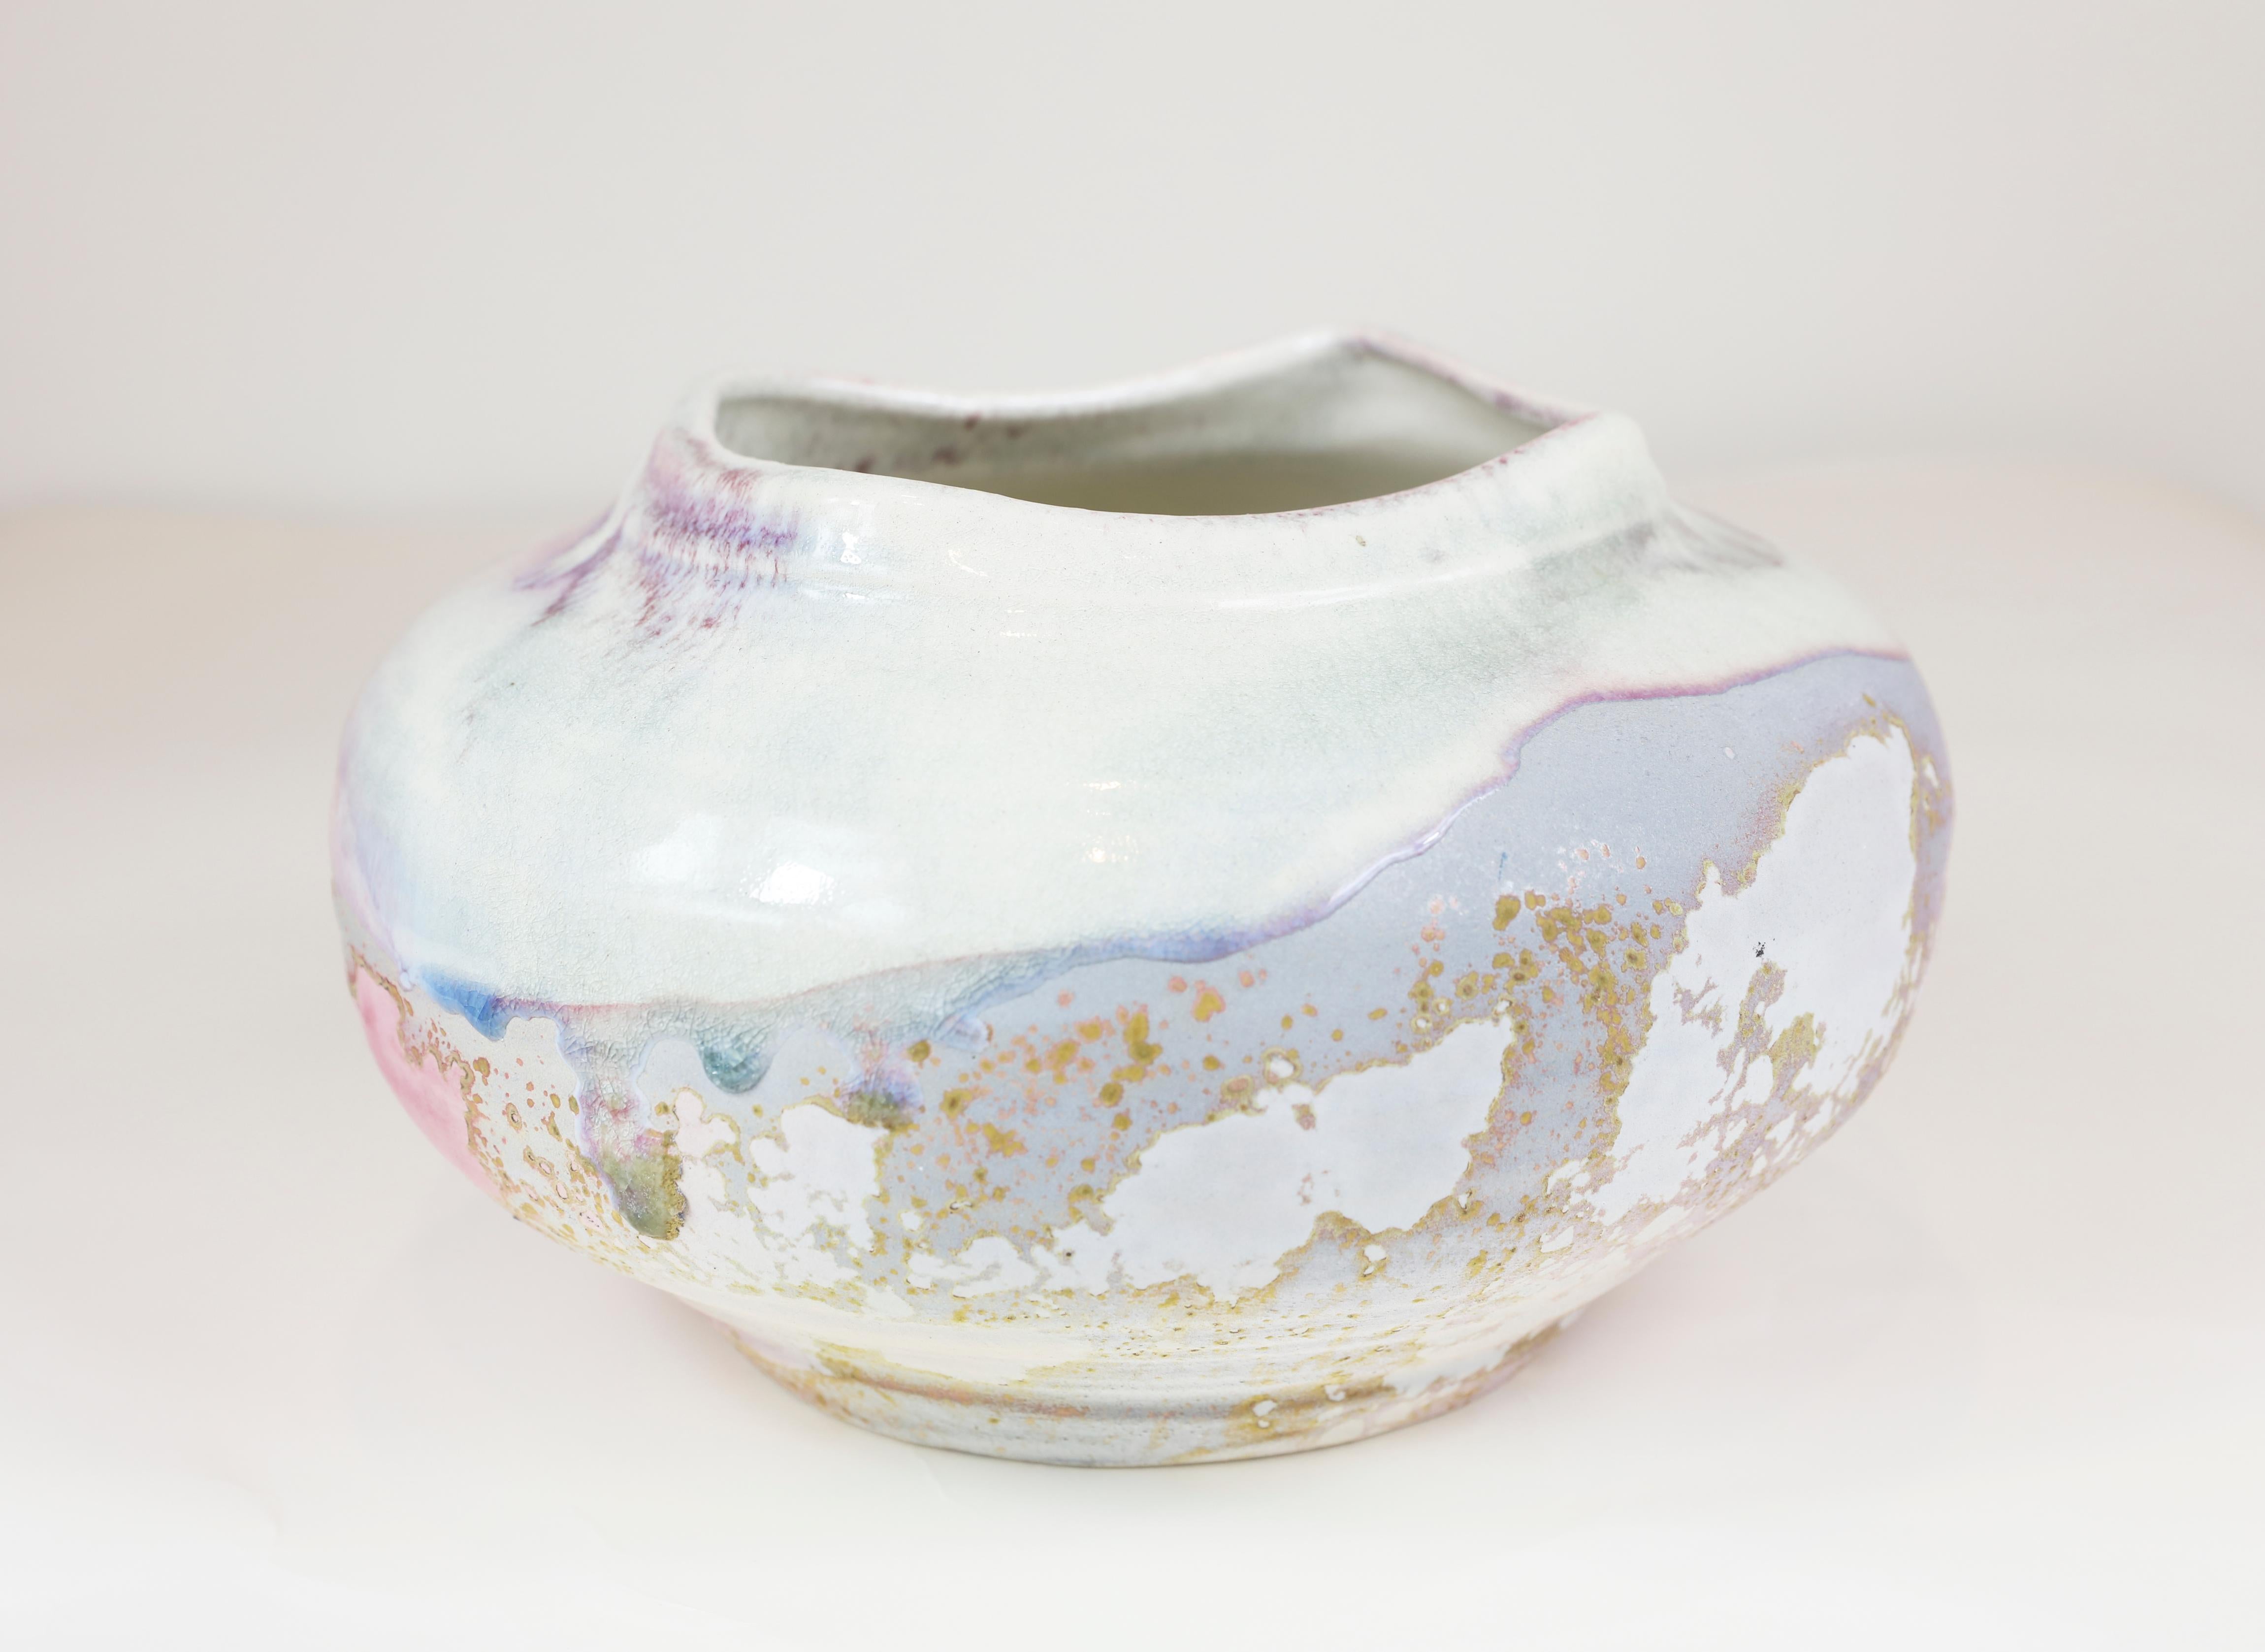 Signed ceramic gallery vase

Measures: 10